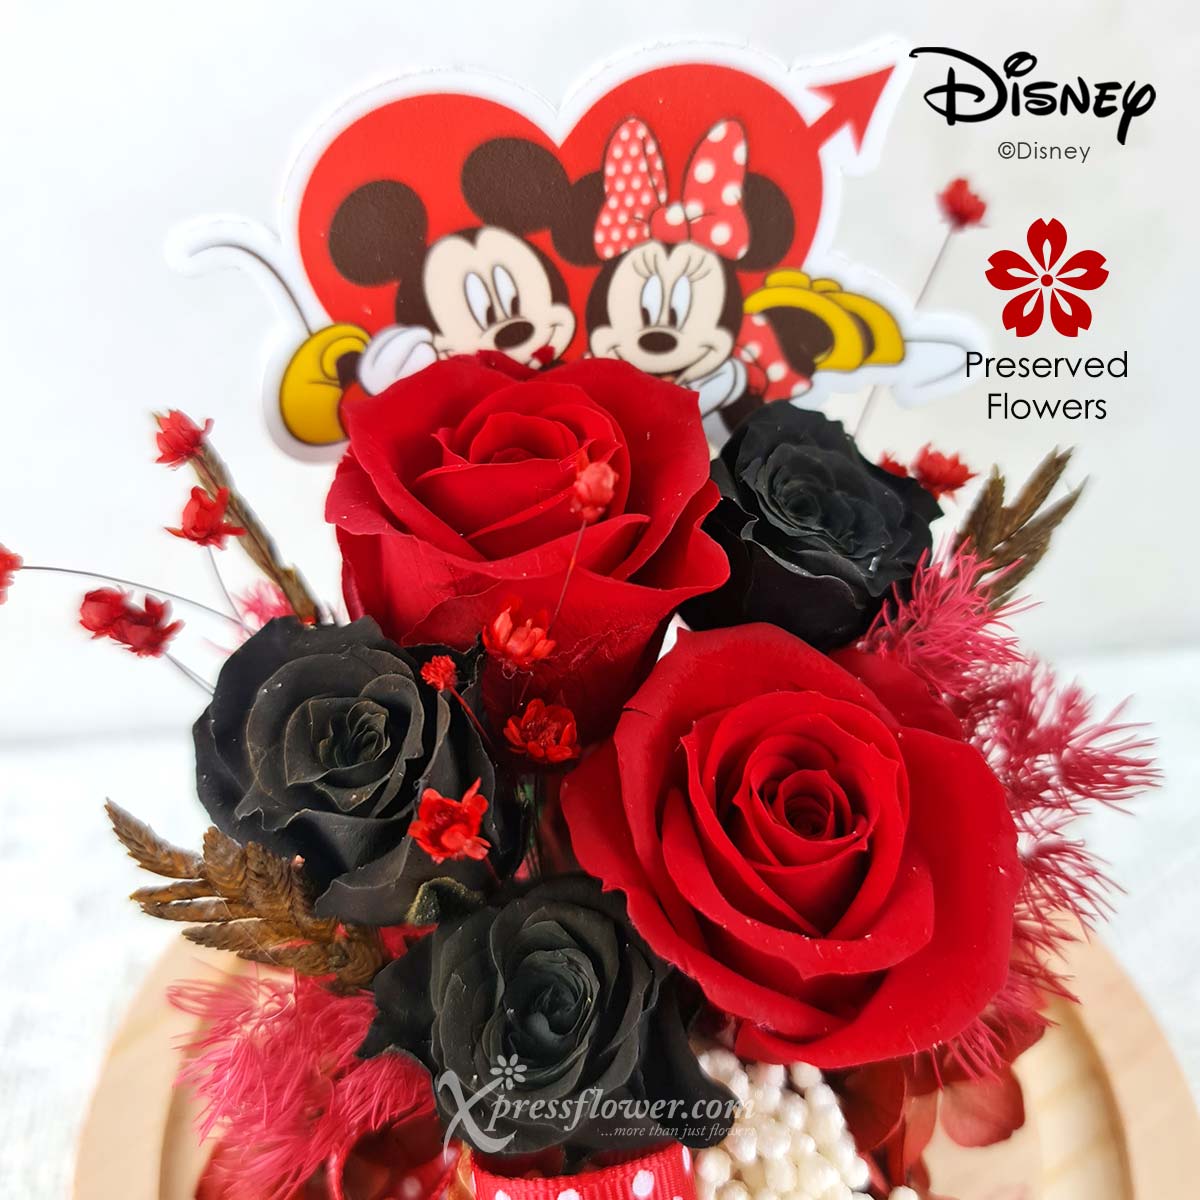 VDS2482_Disney Romance Disney Preserved Flowers_1C